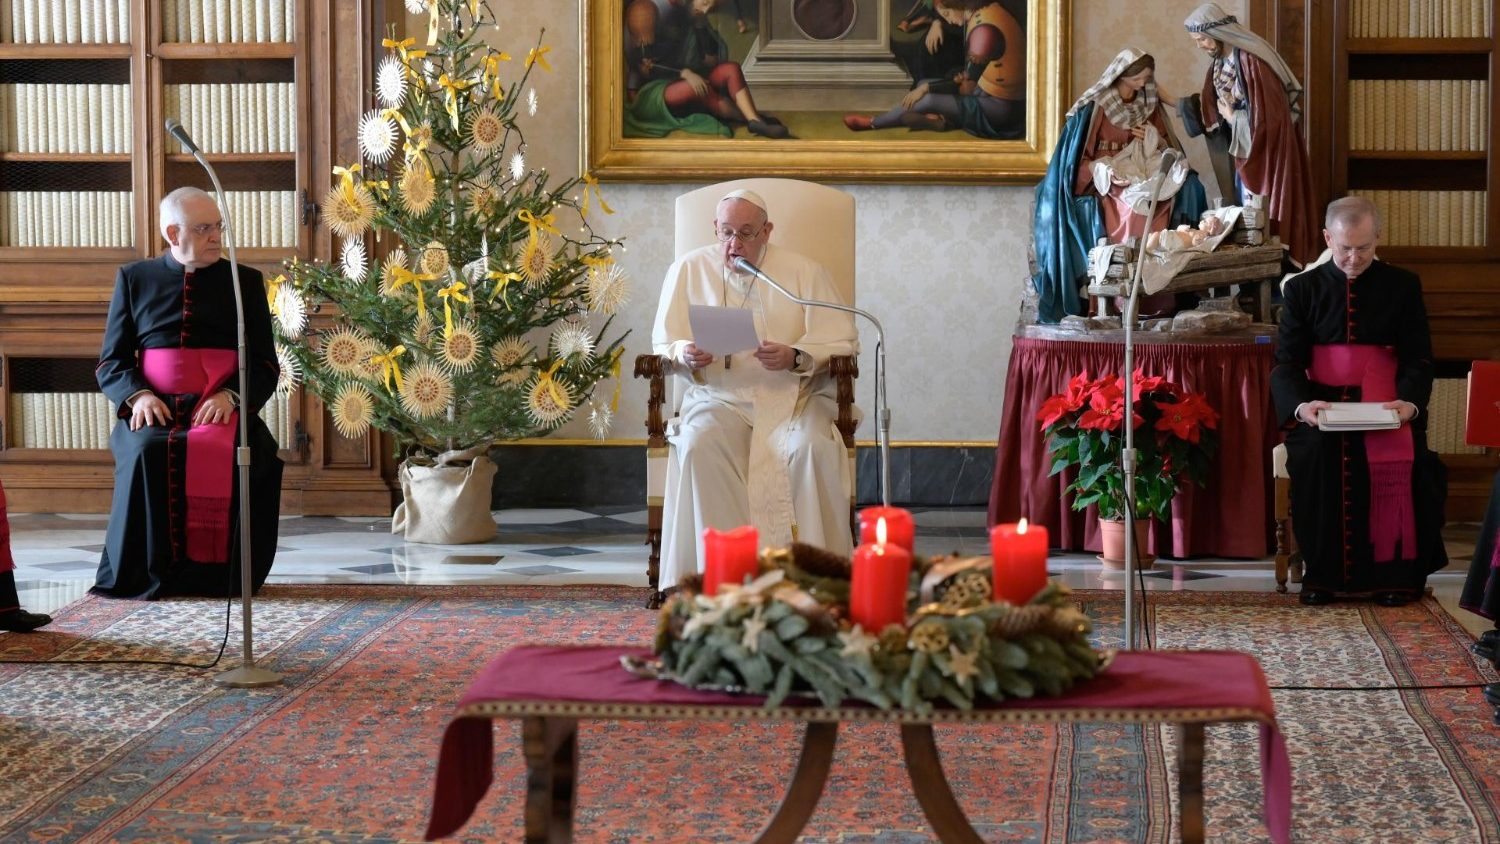 Audience Pope: Jesus’ “sickness” is a Christmas teaching